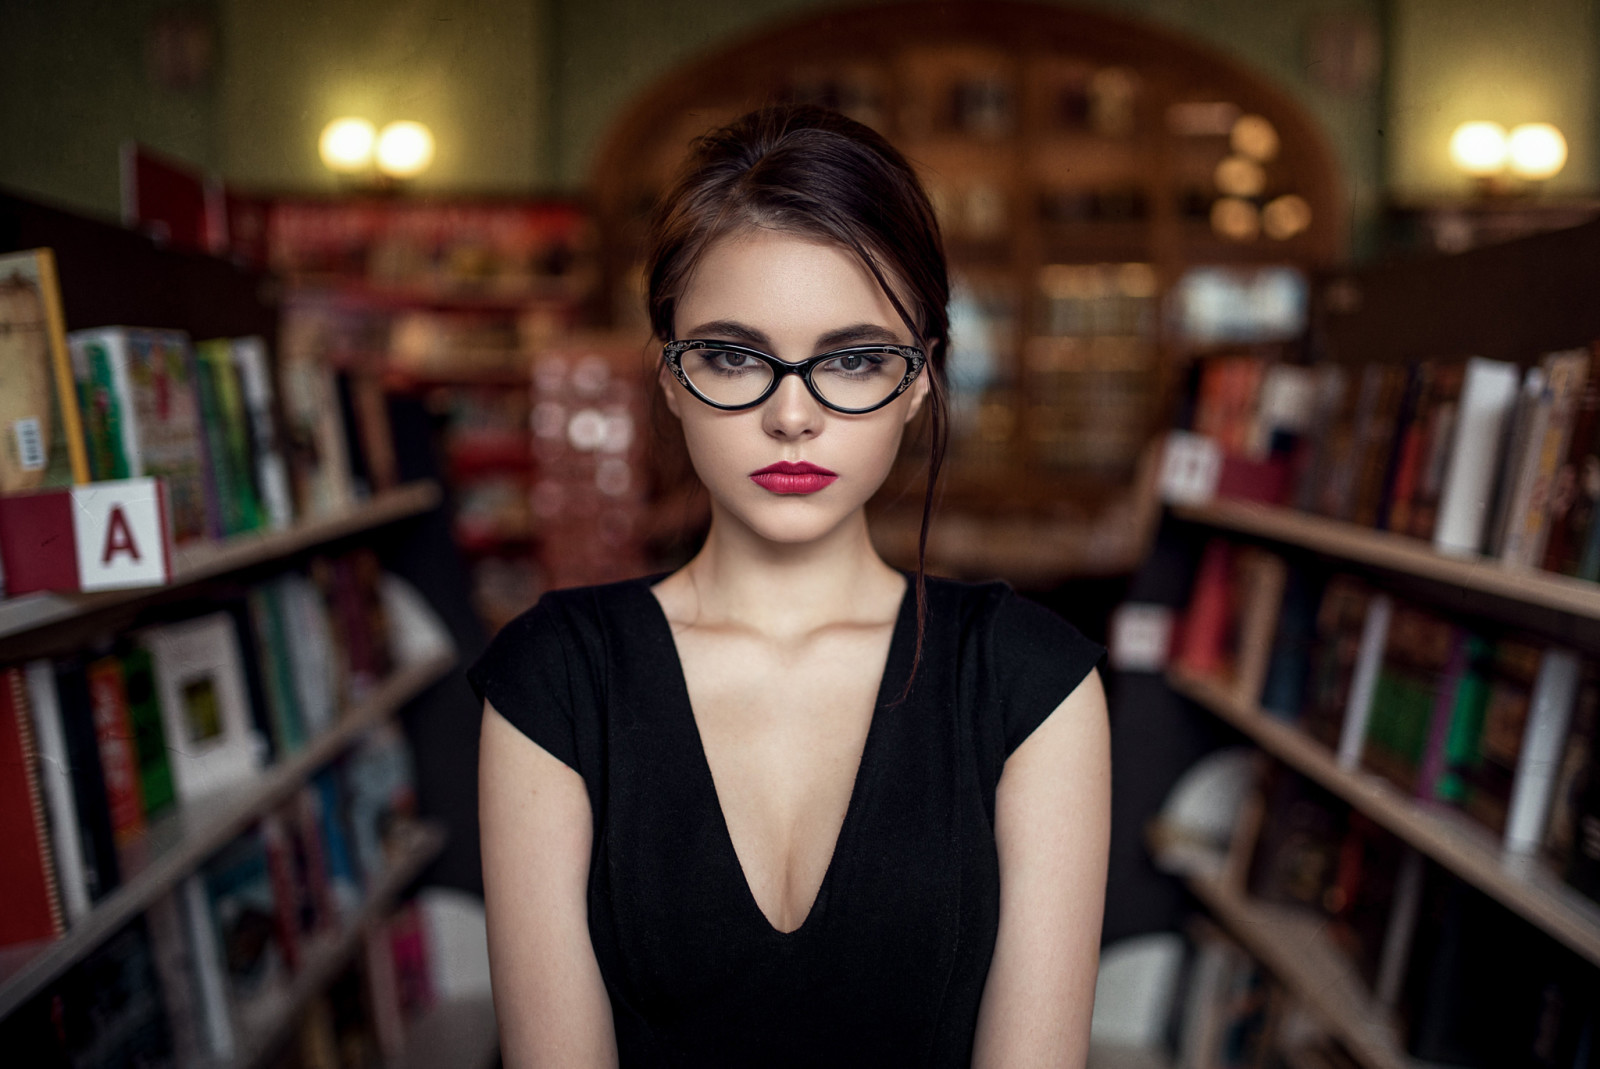 Lihat, wajah, Perpustakaan, kacamata, rambut, bibir